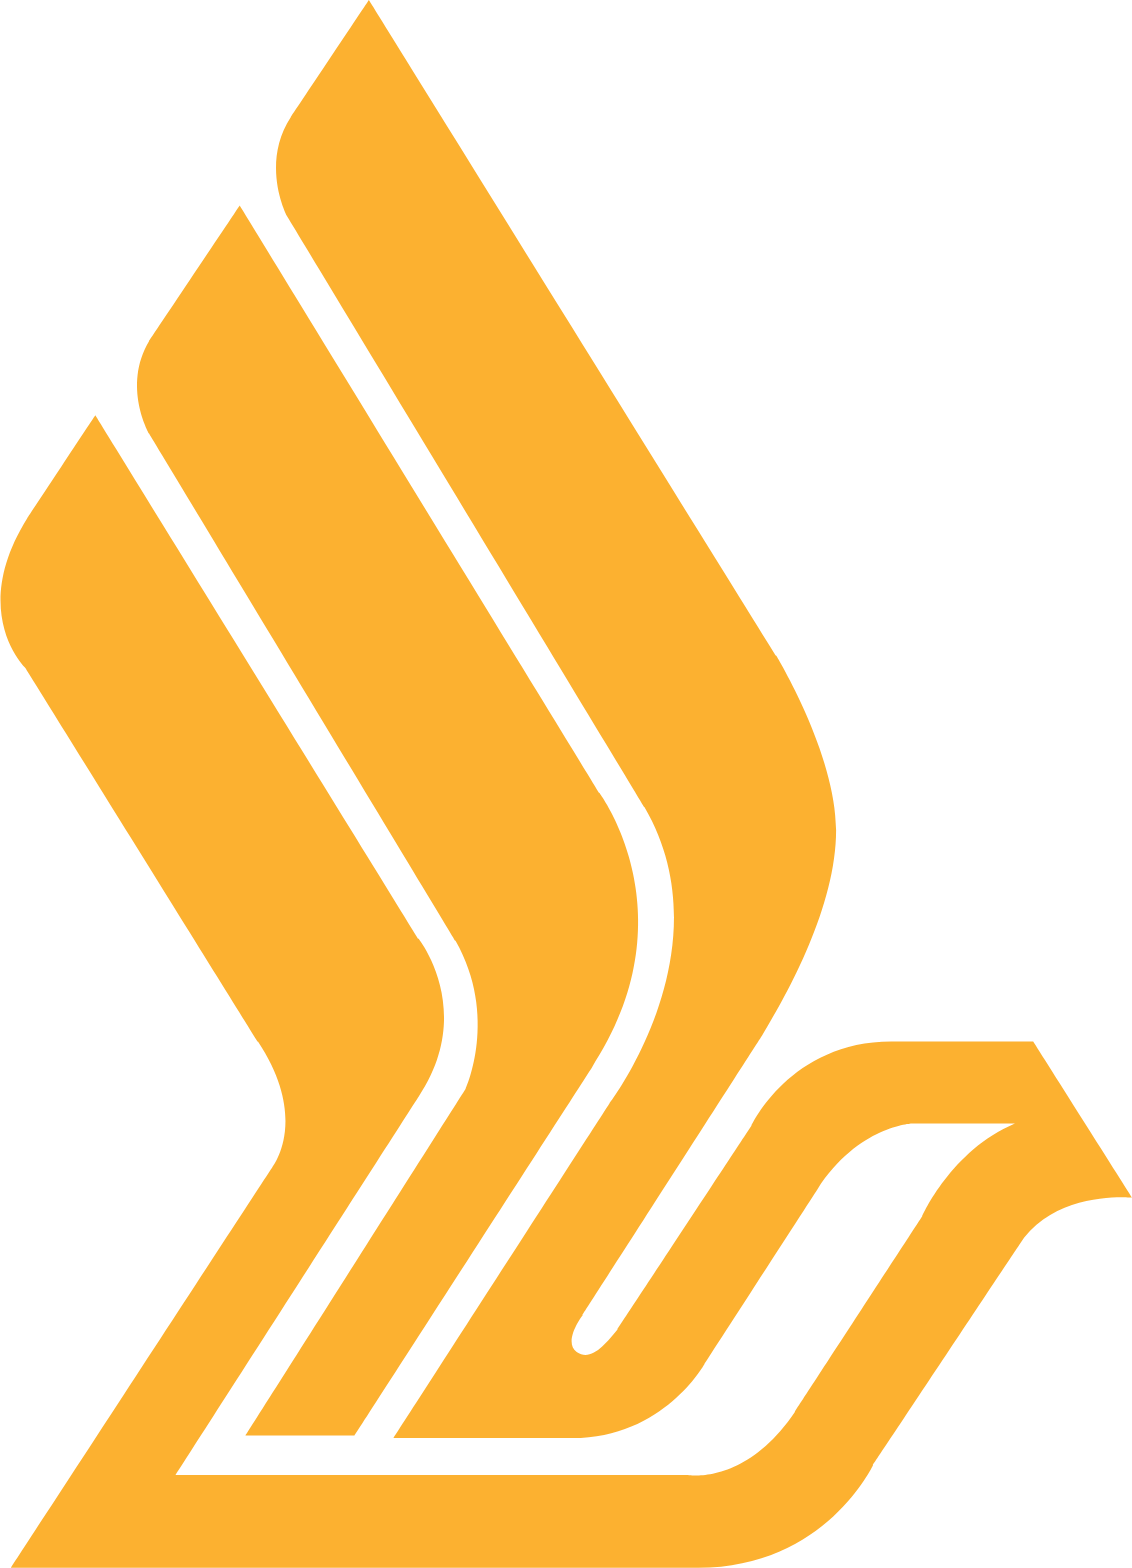 Singapore Airlines logo (PNG transparent)